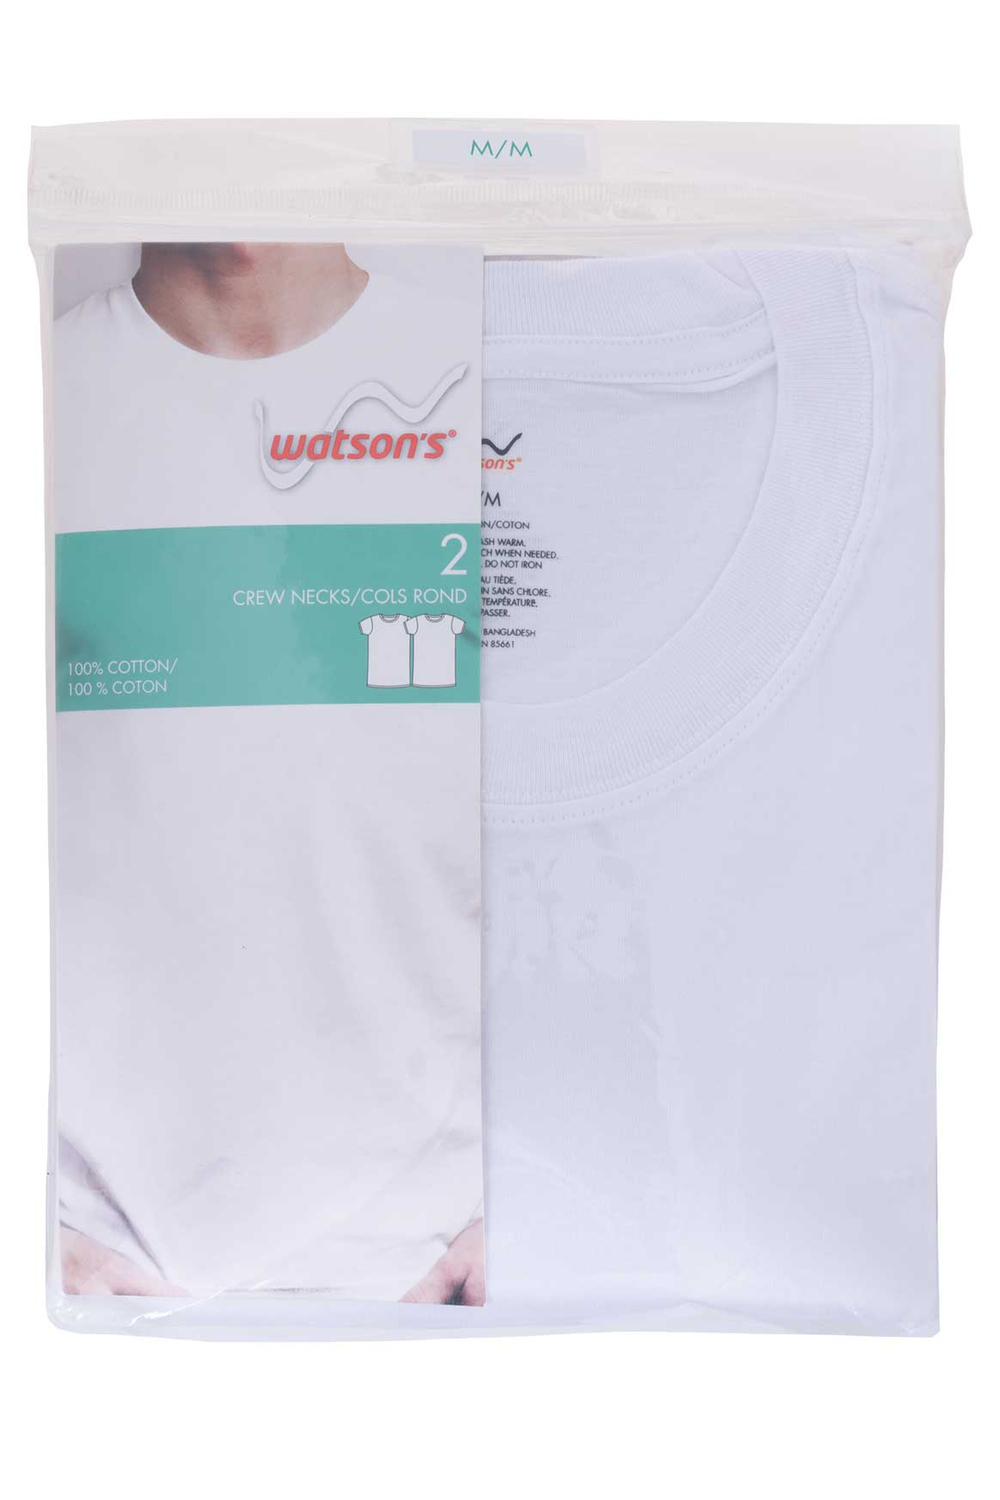 Watson's - Men's 2 pack 100% cotton crew neck t-shirts, white, medium (M)